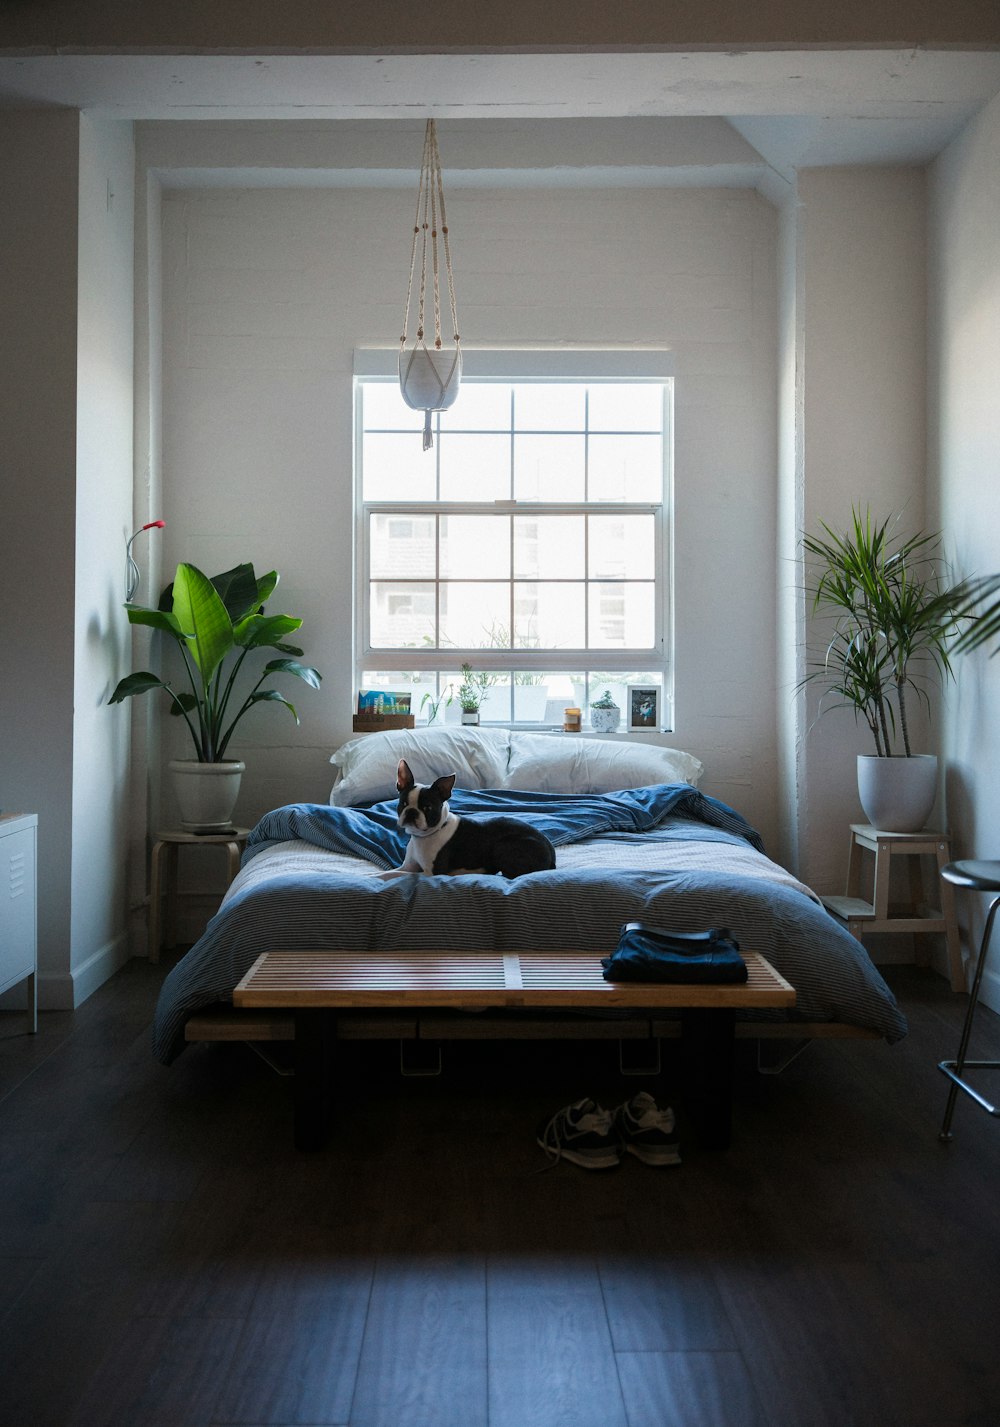 100+ Bedroom Pictures | Download Free Images on Unsplash